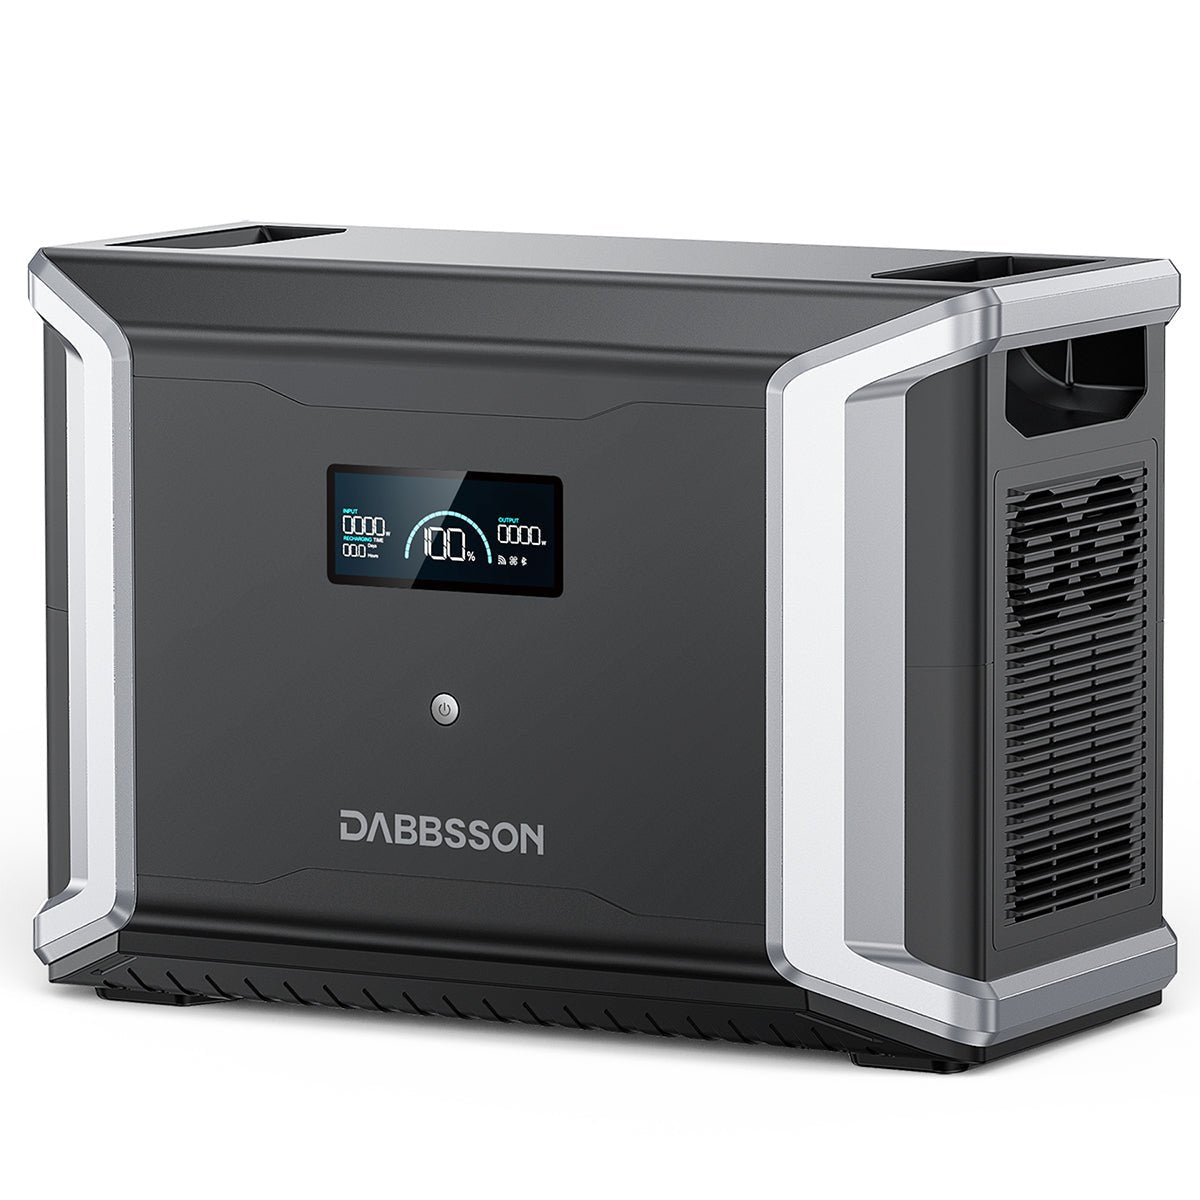 Dabbsson DBS3000B 容量拡張バッテリー DBS2300 & DBS2300 Plus 専用のエクストラバッテリー 3000Wh - Dabbsson JP